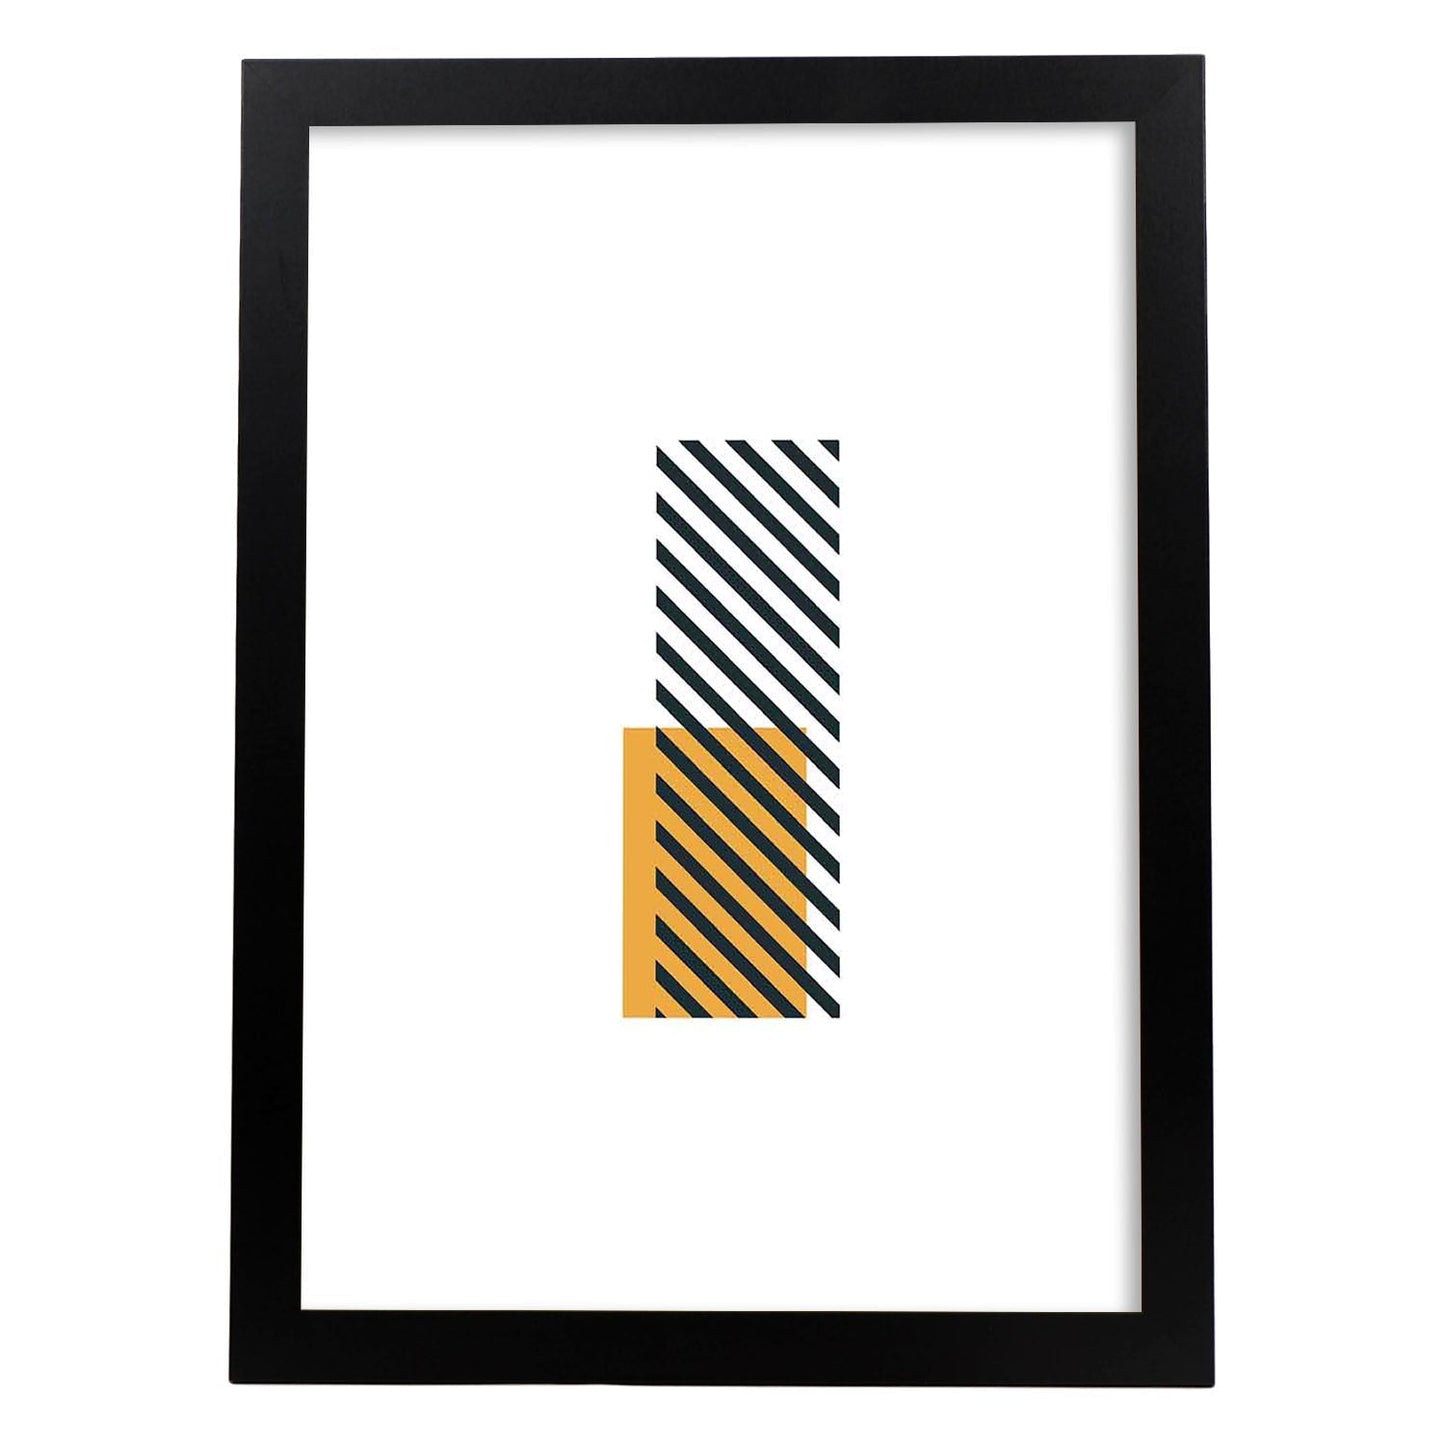 Poster de letra I. Lámina estilo Geometria con imágenes del alfabeto.-Artwork-Nacnic-A4-Marco Negro-Nacnic Estudio SL